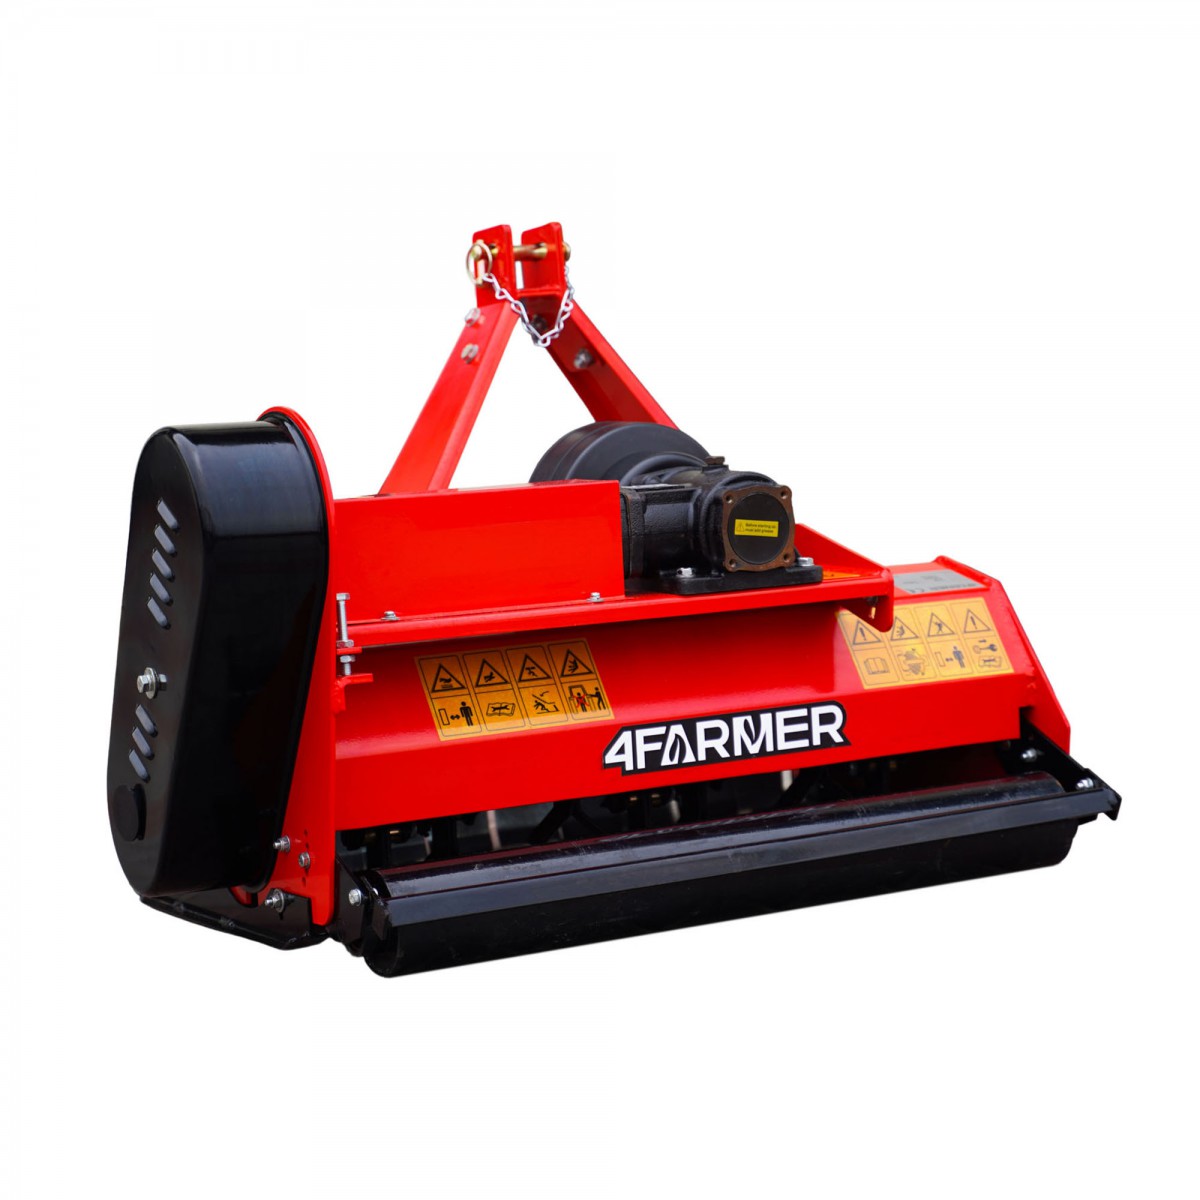 Trituradora de martillos EF 95 4FARMER - roja